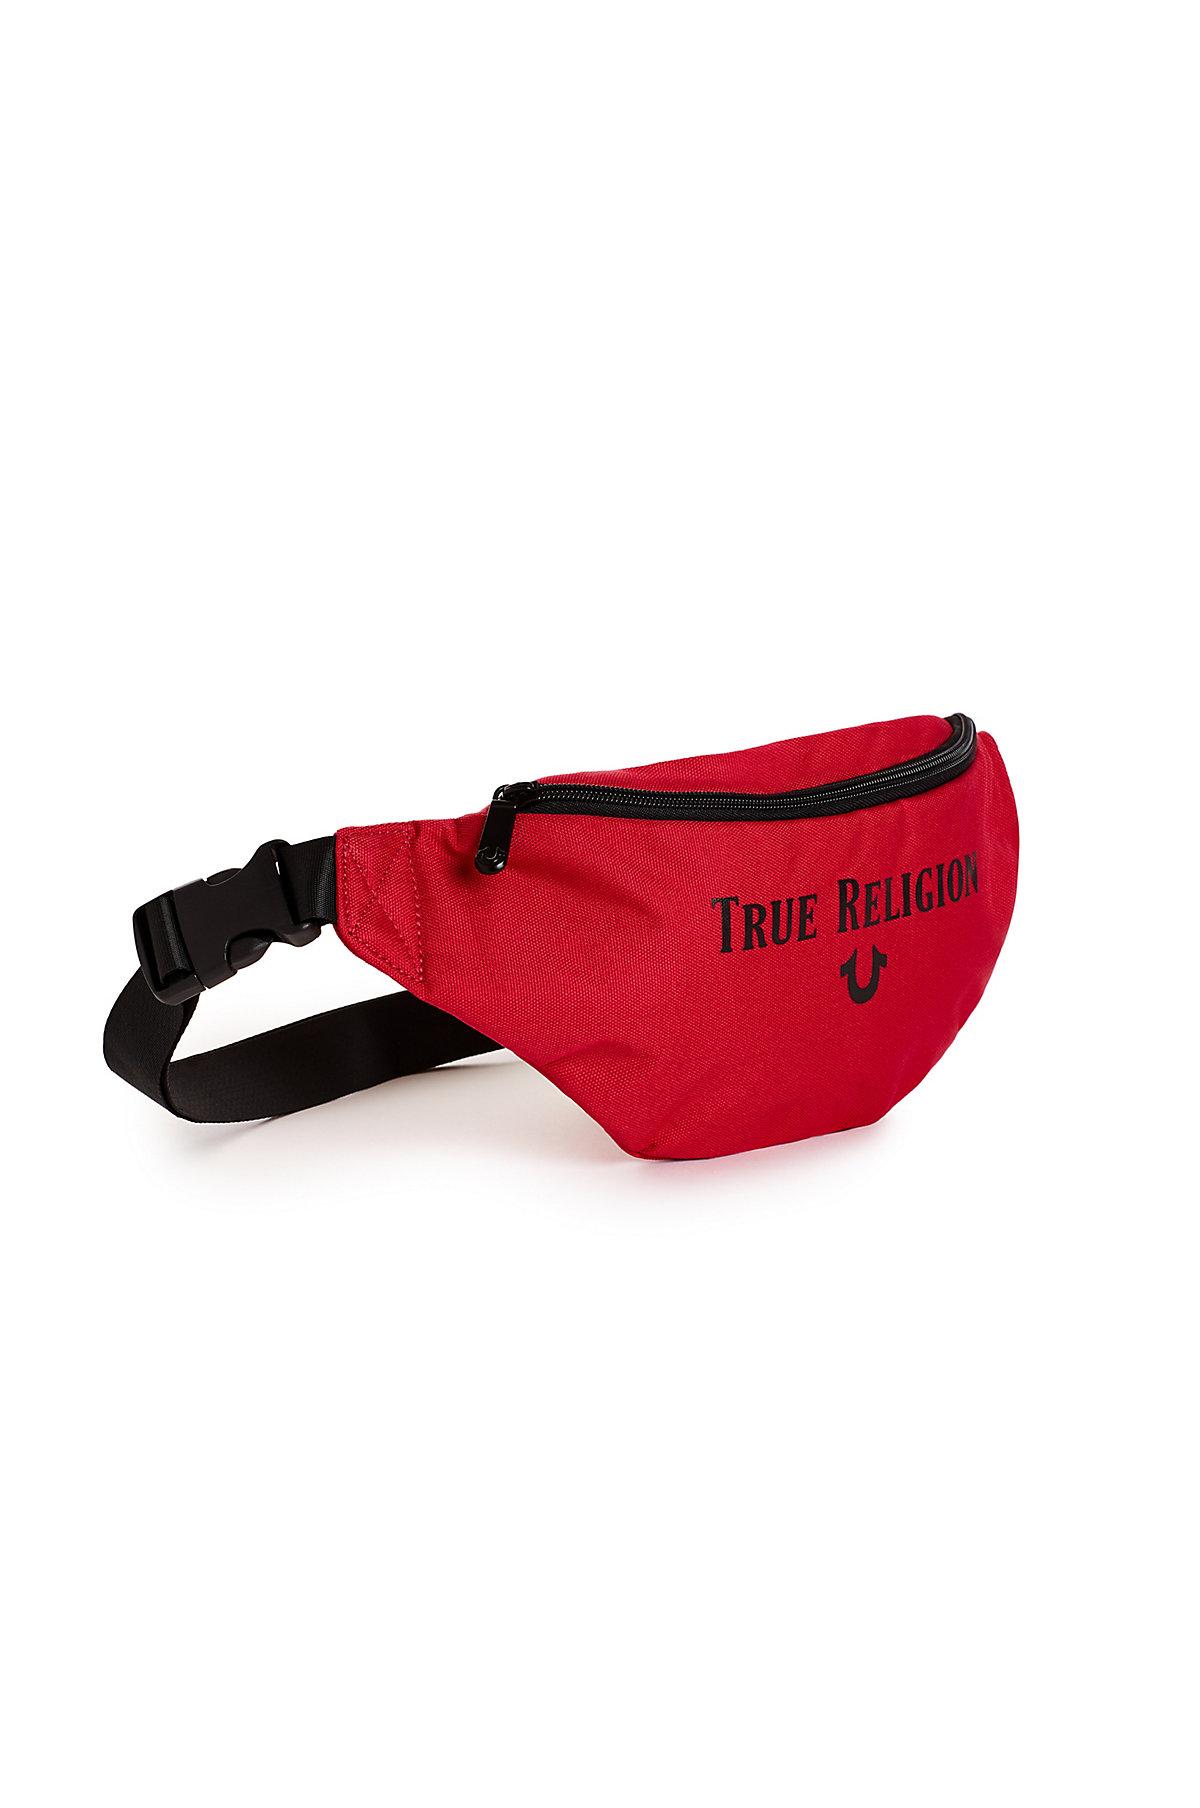 true religion belt bag